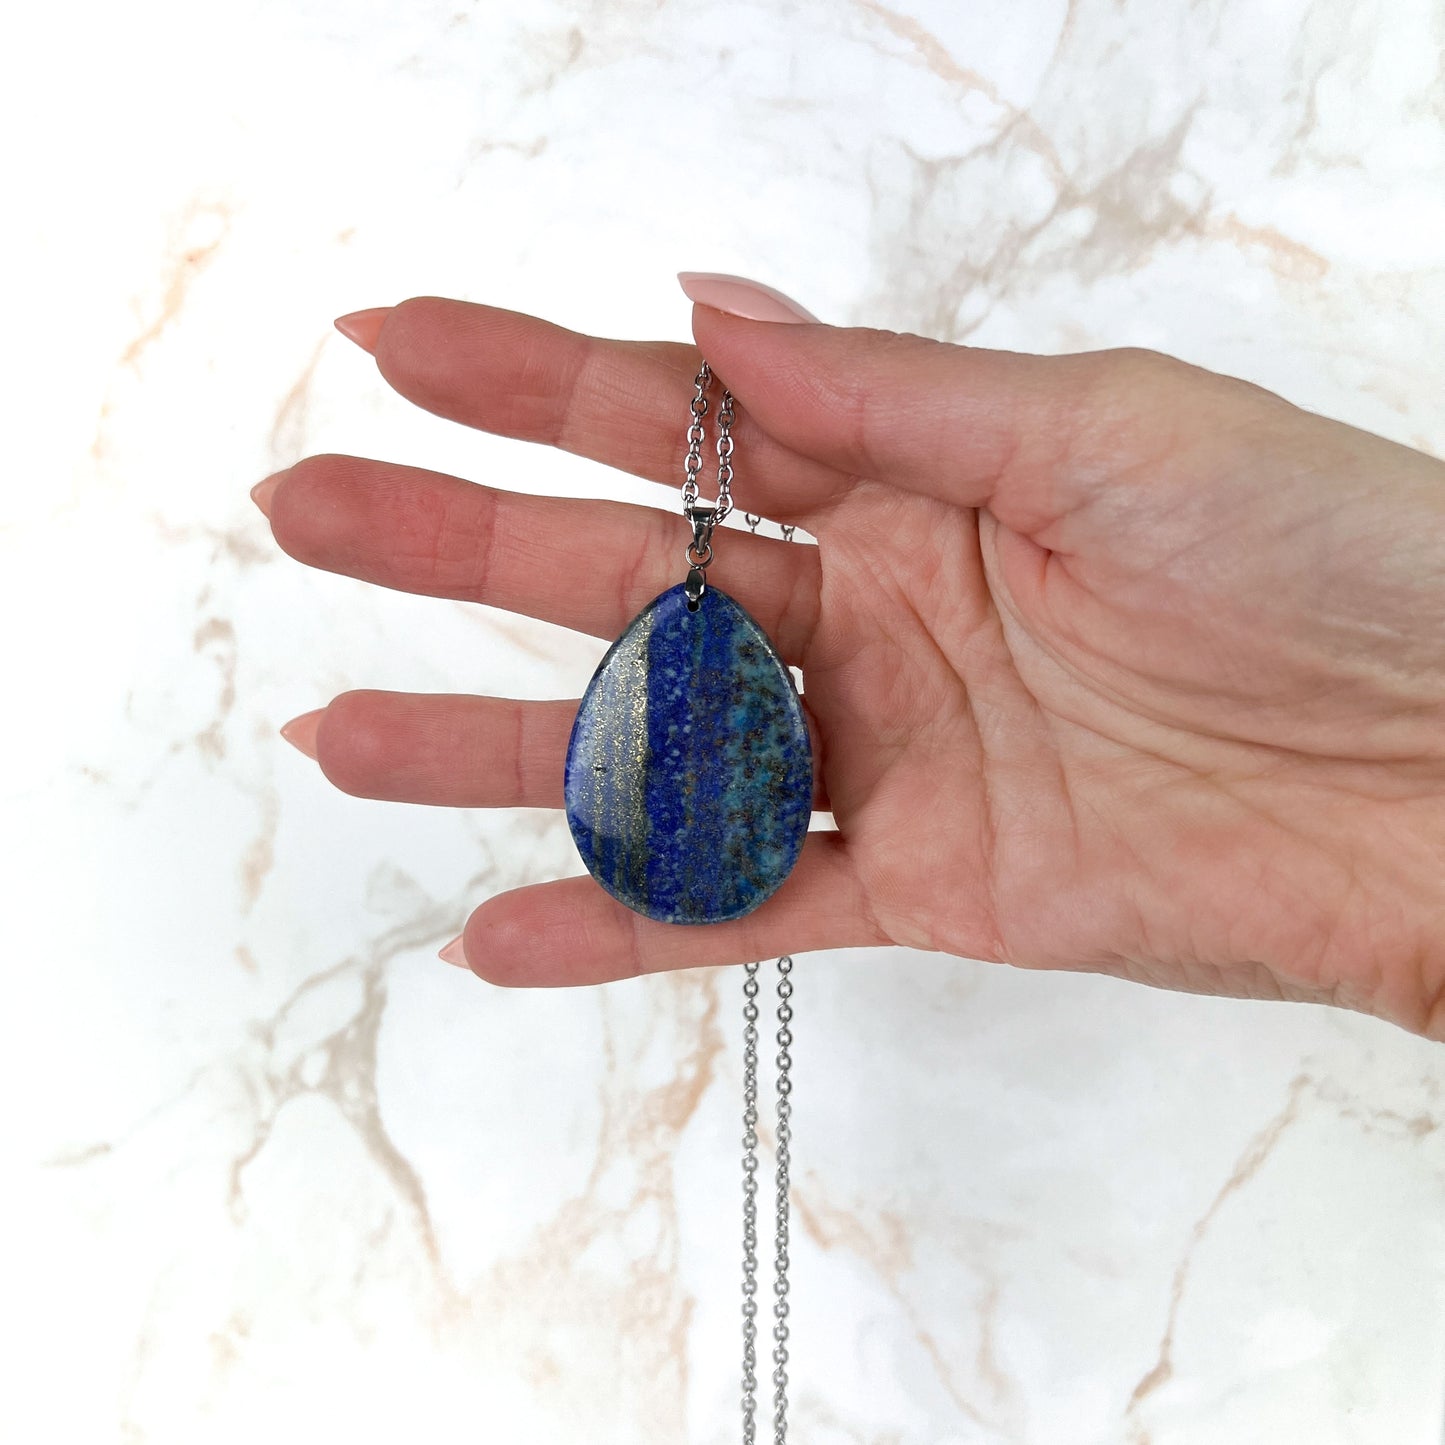 Lapis lazuli stainless steel pendant necklace